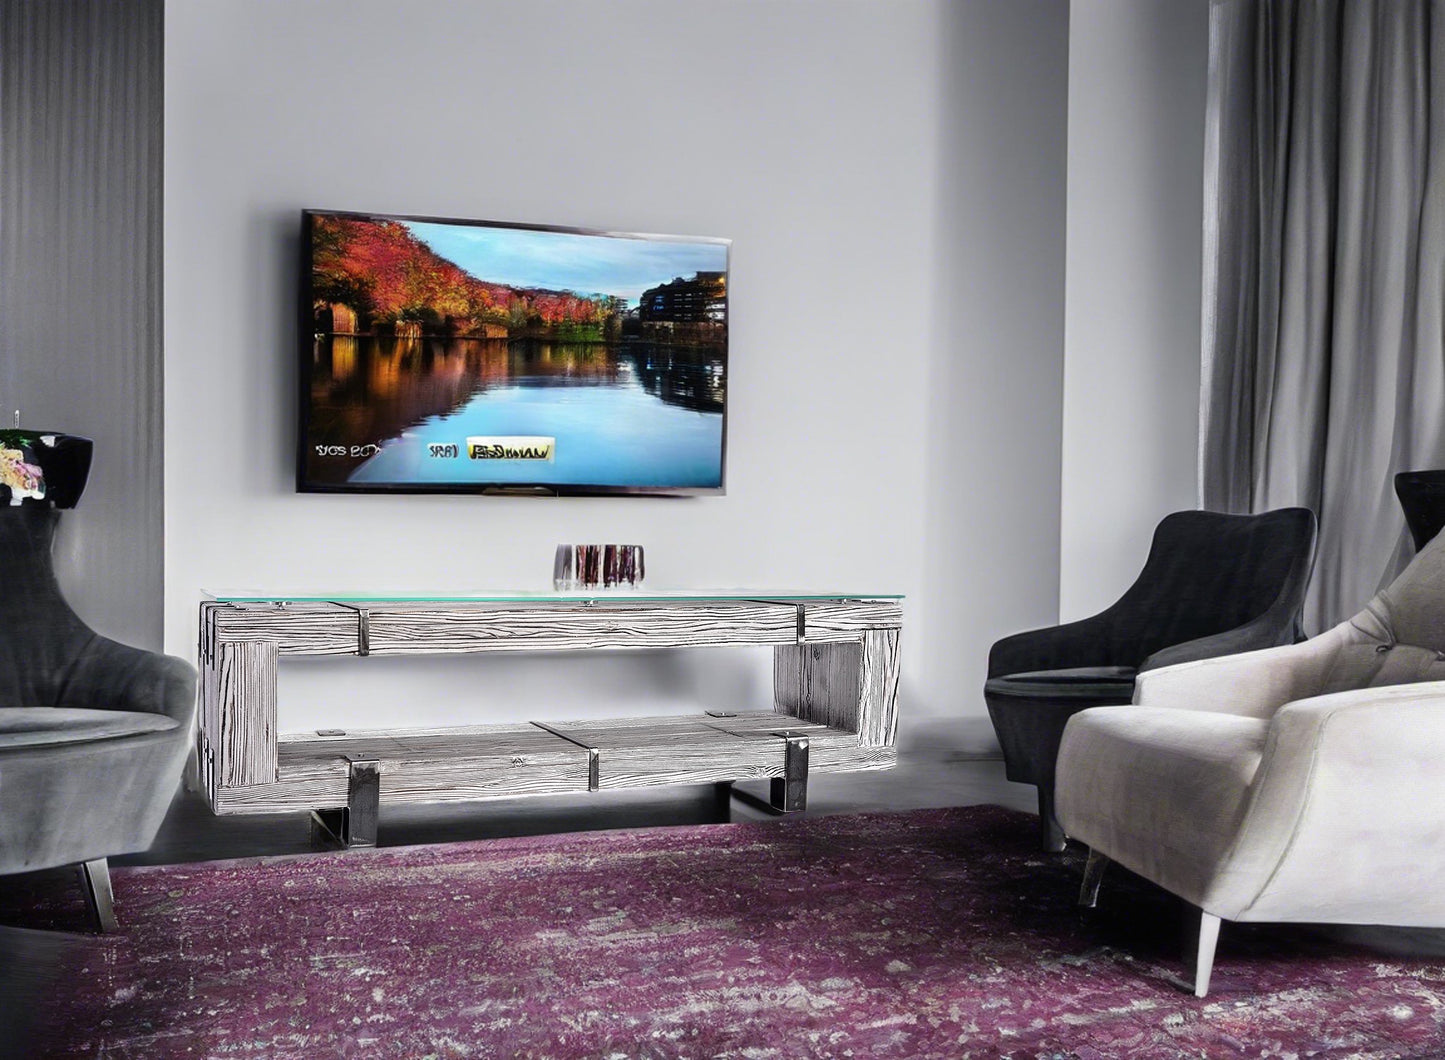 CHYRKA® Mueble TV (120-160-200 cm) BORYSLAW Mueble TV Lowboard Mesa TV Mueble TV